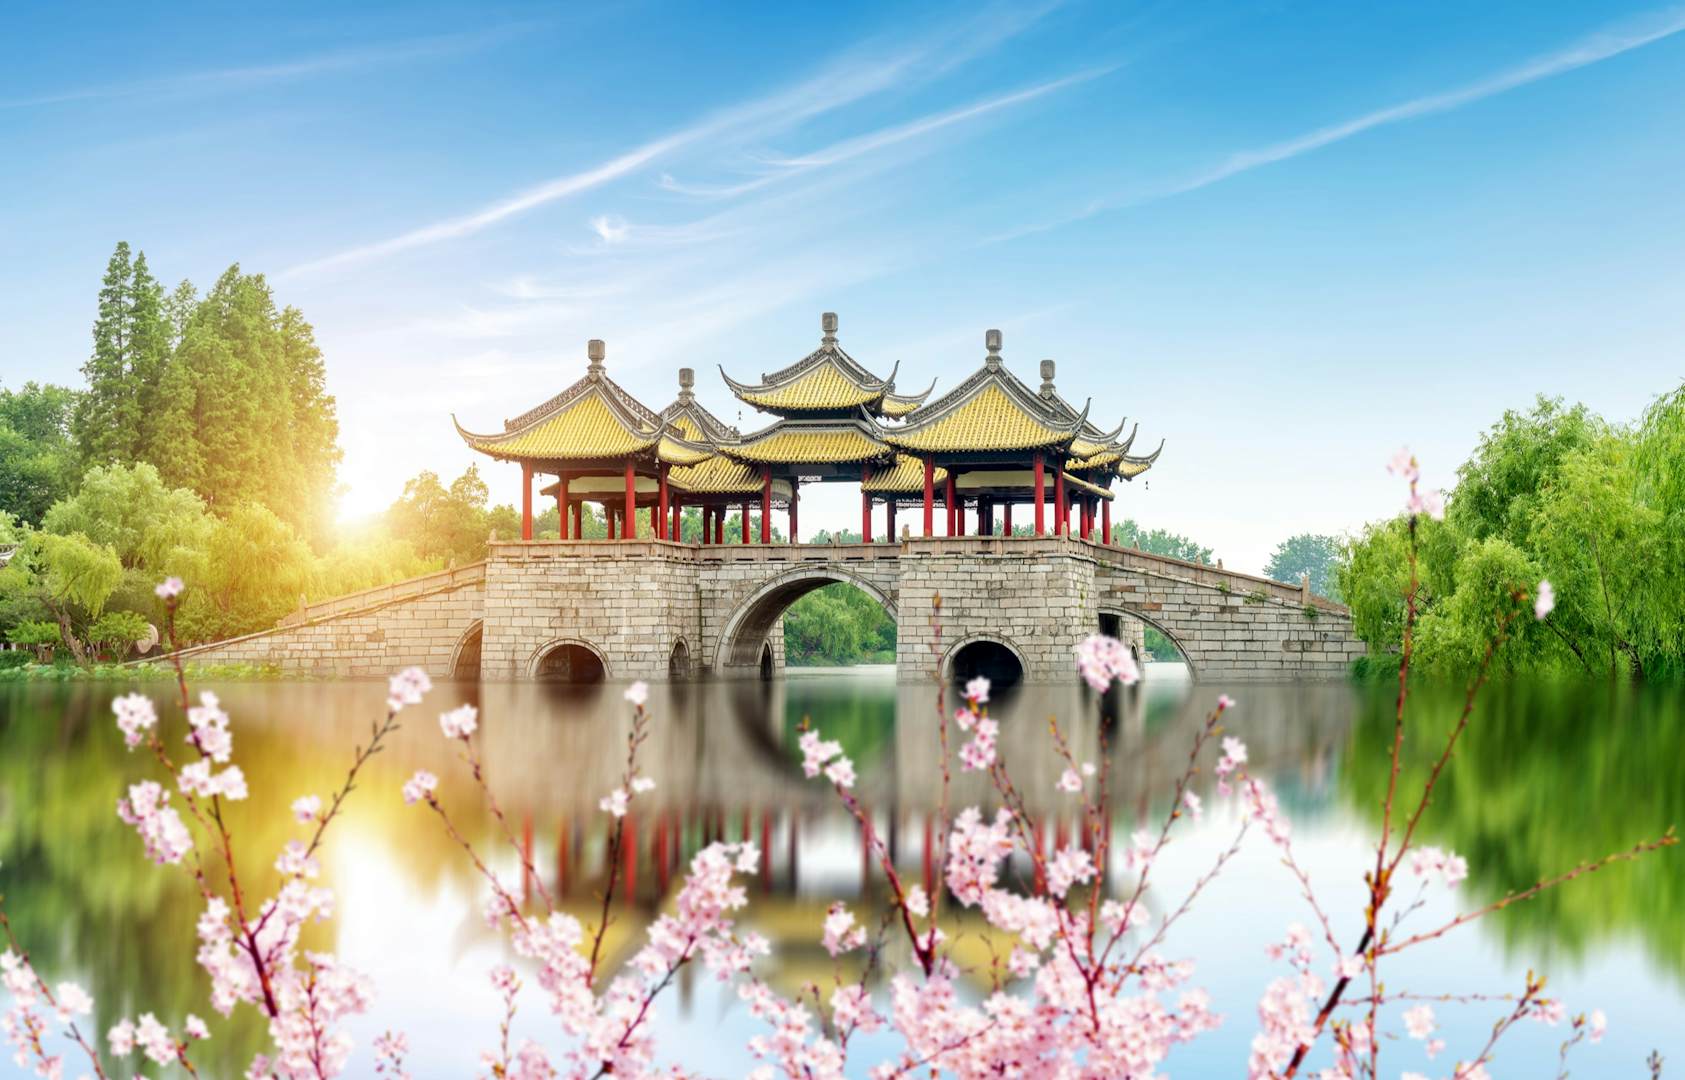 Wuting Bridge，也被称为Lotus Bridge，是中国扬州细长的西湖一座著名的古老建筑。